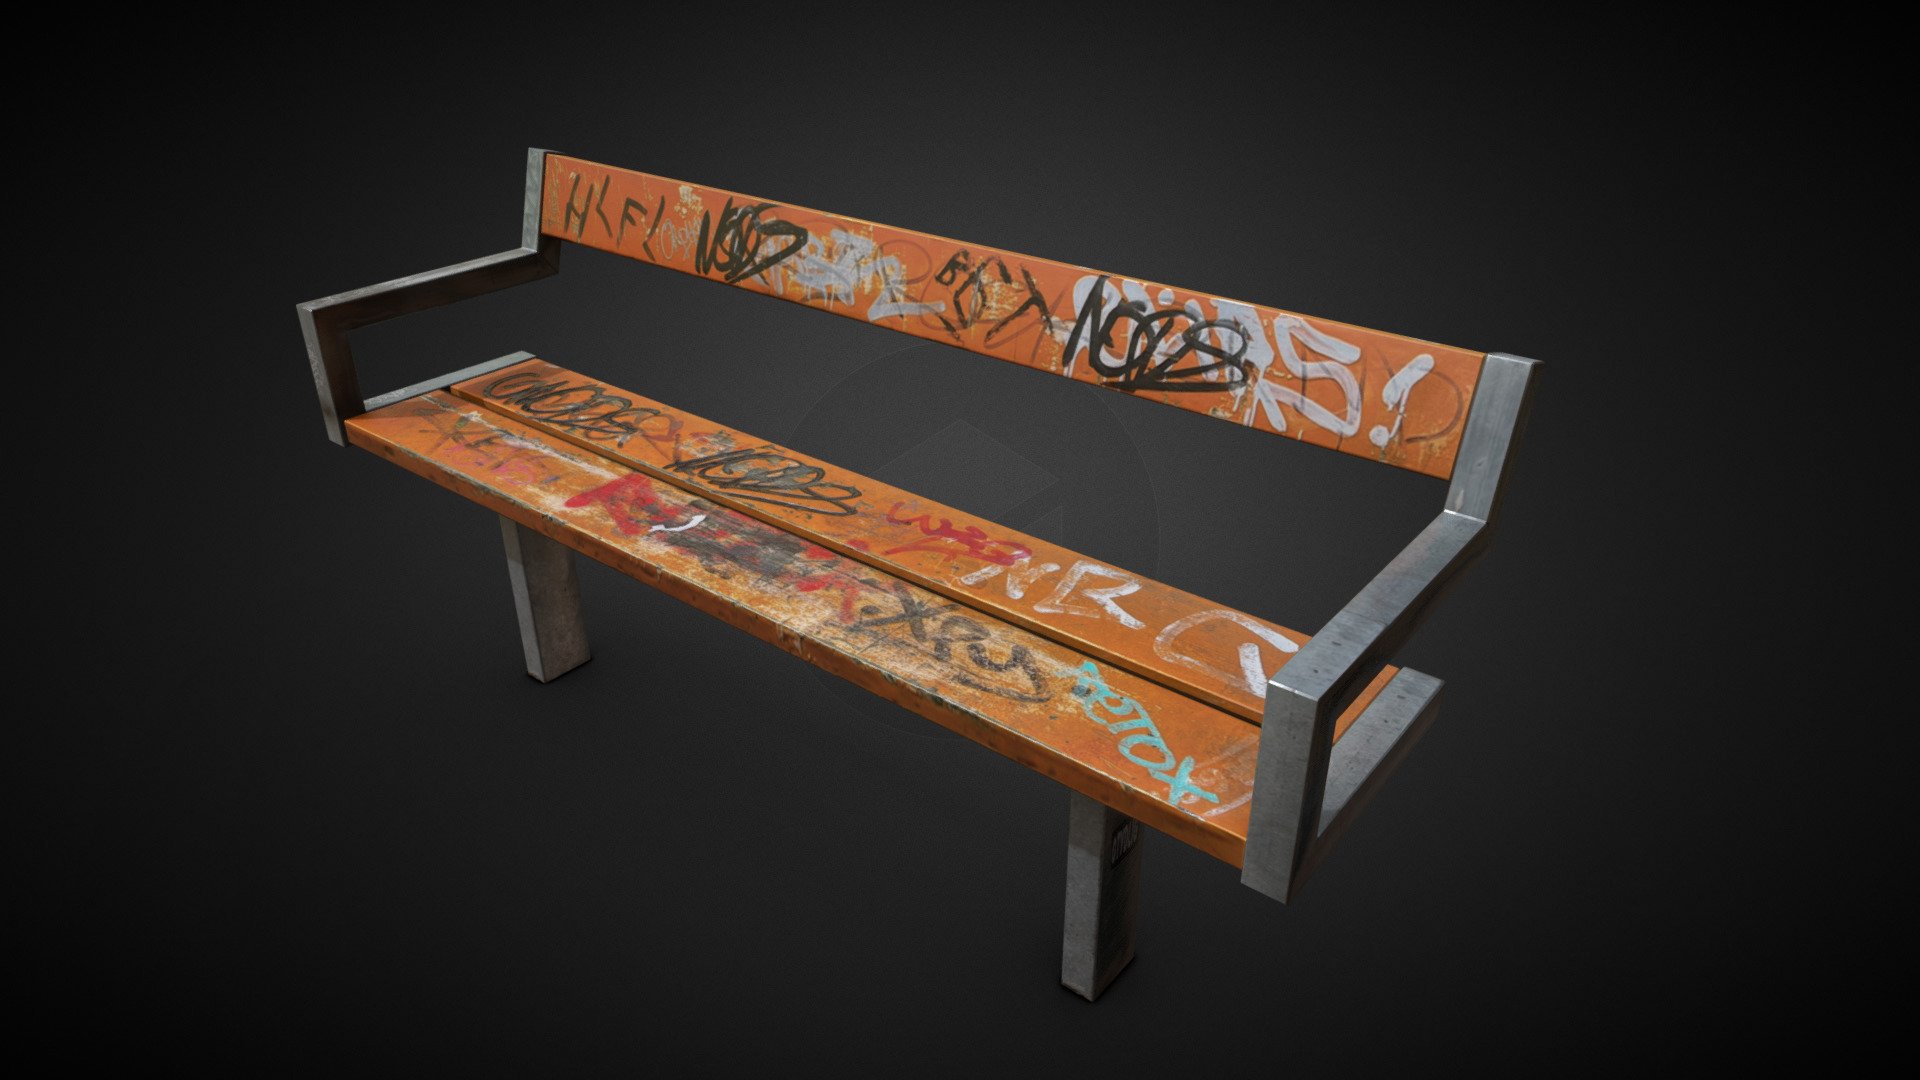 a bench found in skärholmen, stockholm. sprayed by kids. pbr for vr, ar and games 3d model